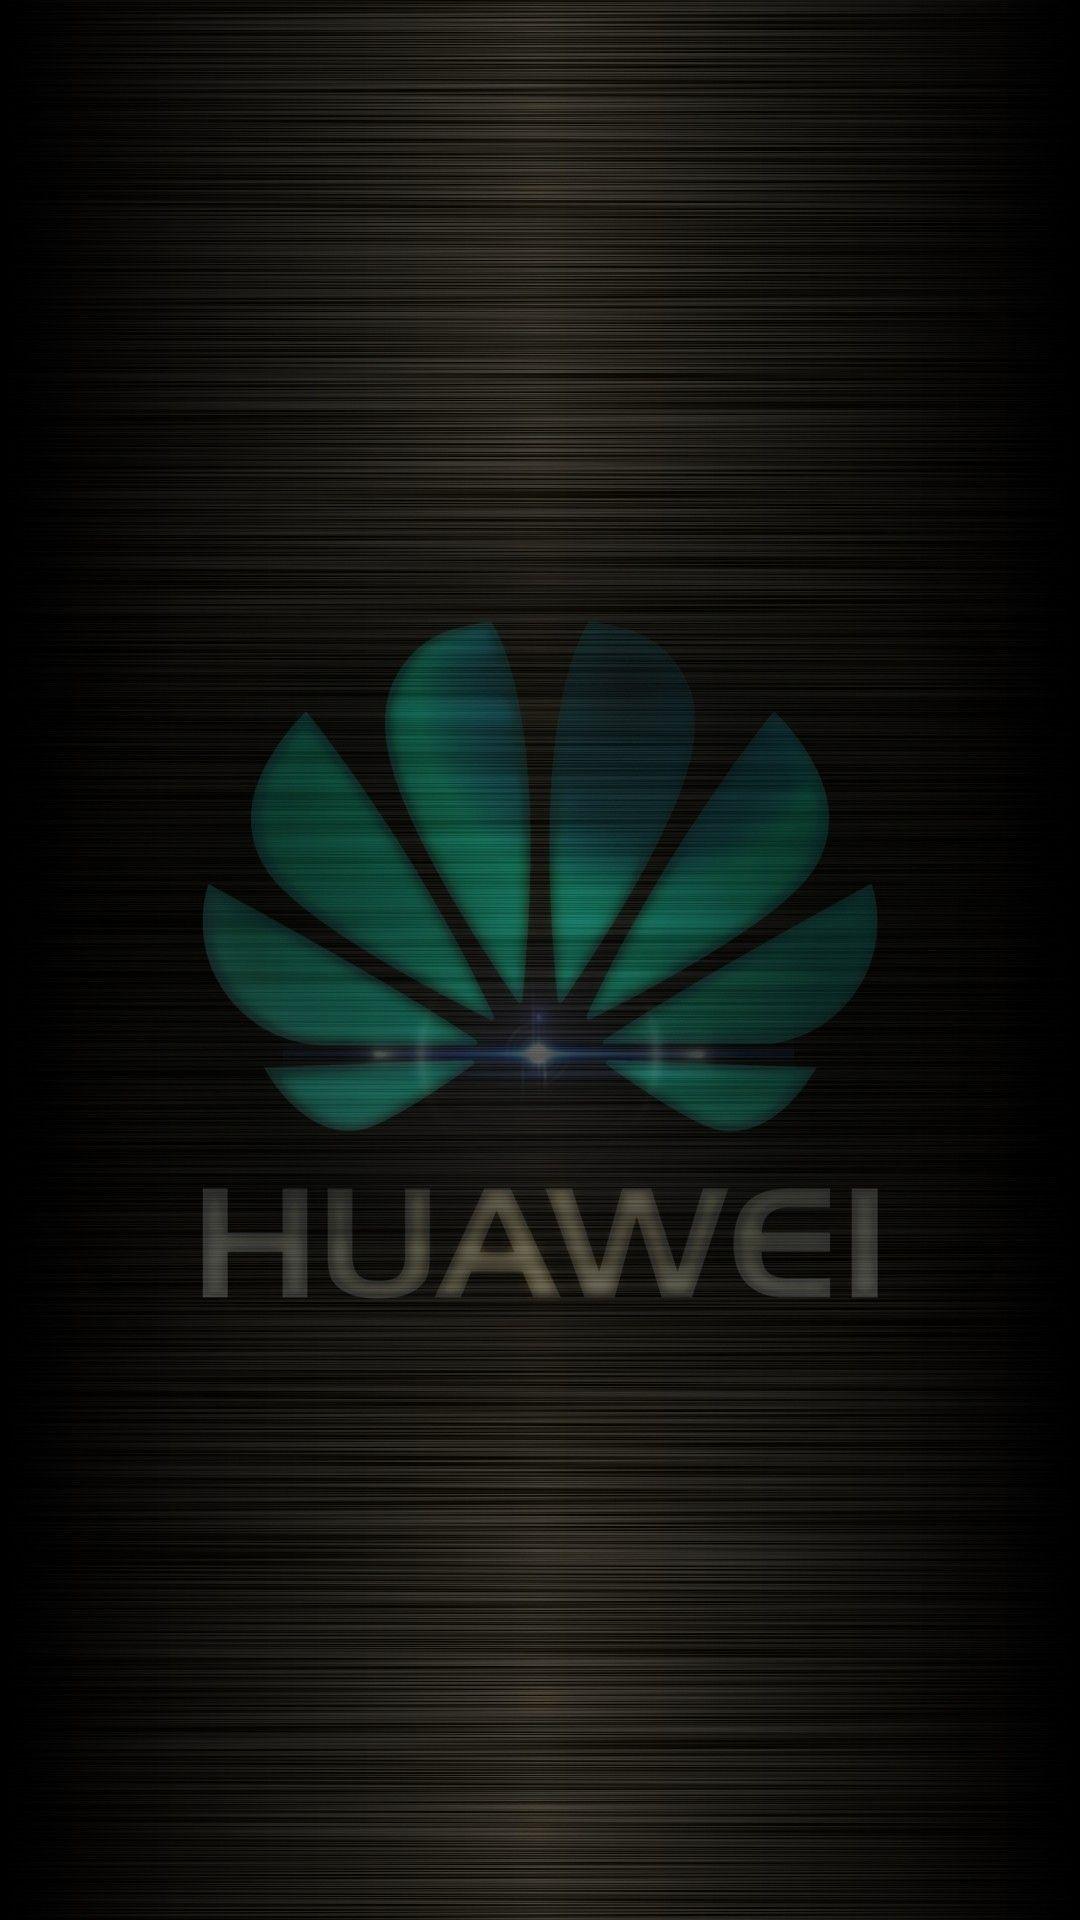 Huawei Smartphone Wallpaper Free Huawei Smartphone